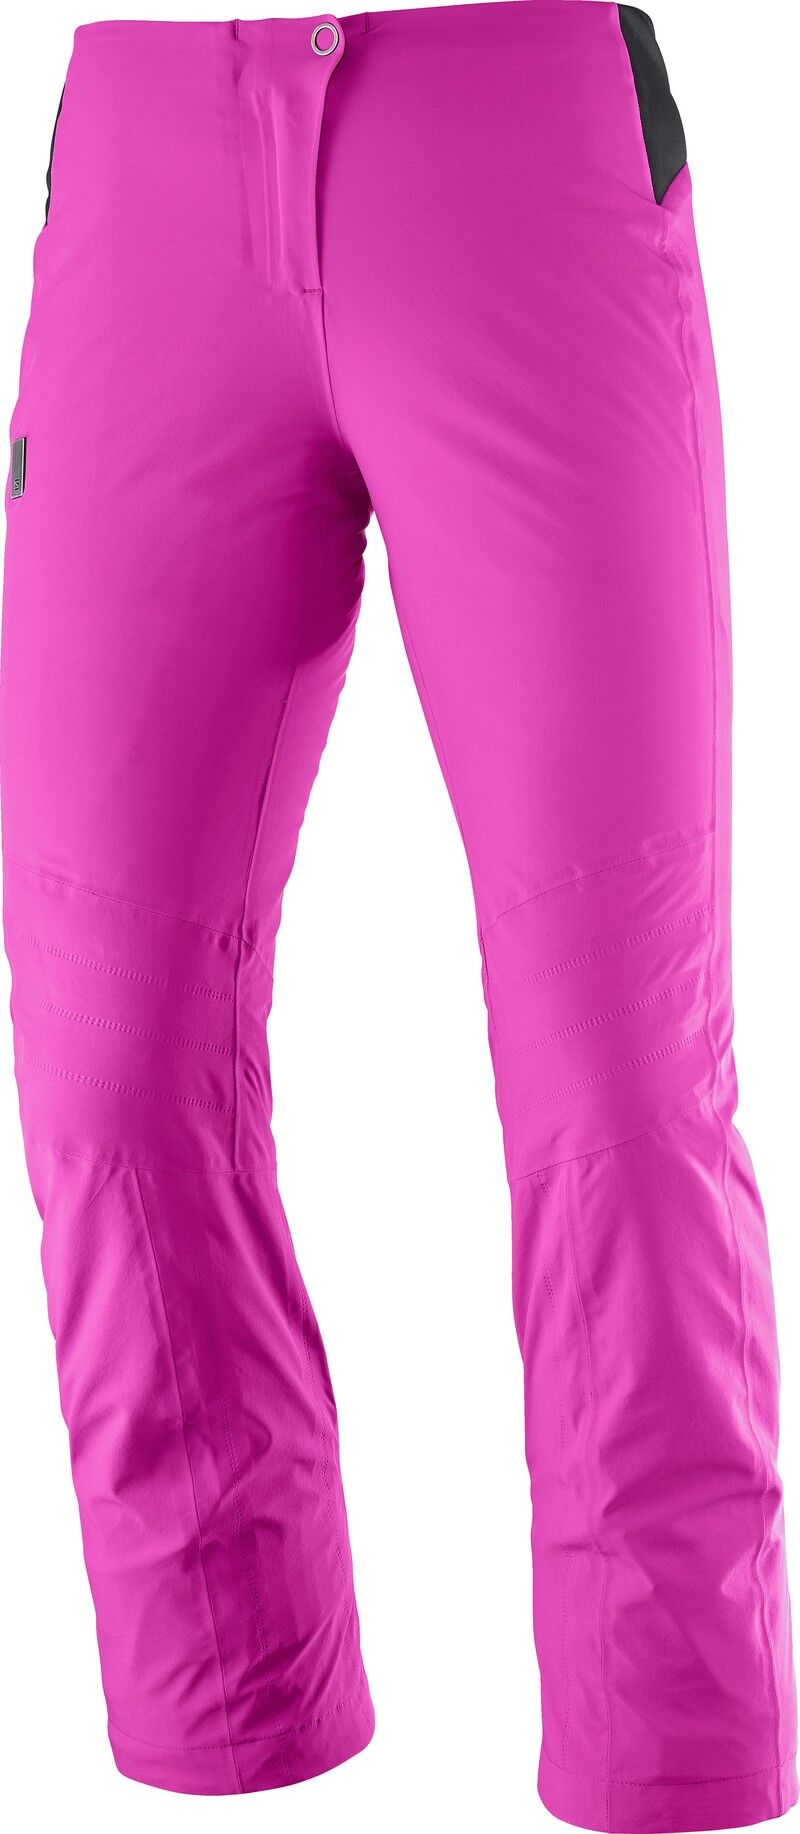 Salomon - Whitelight Pant W - Ski pants - Women's